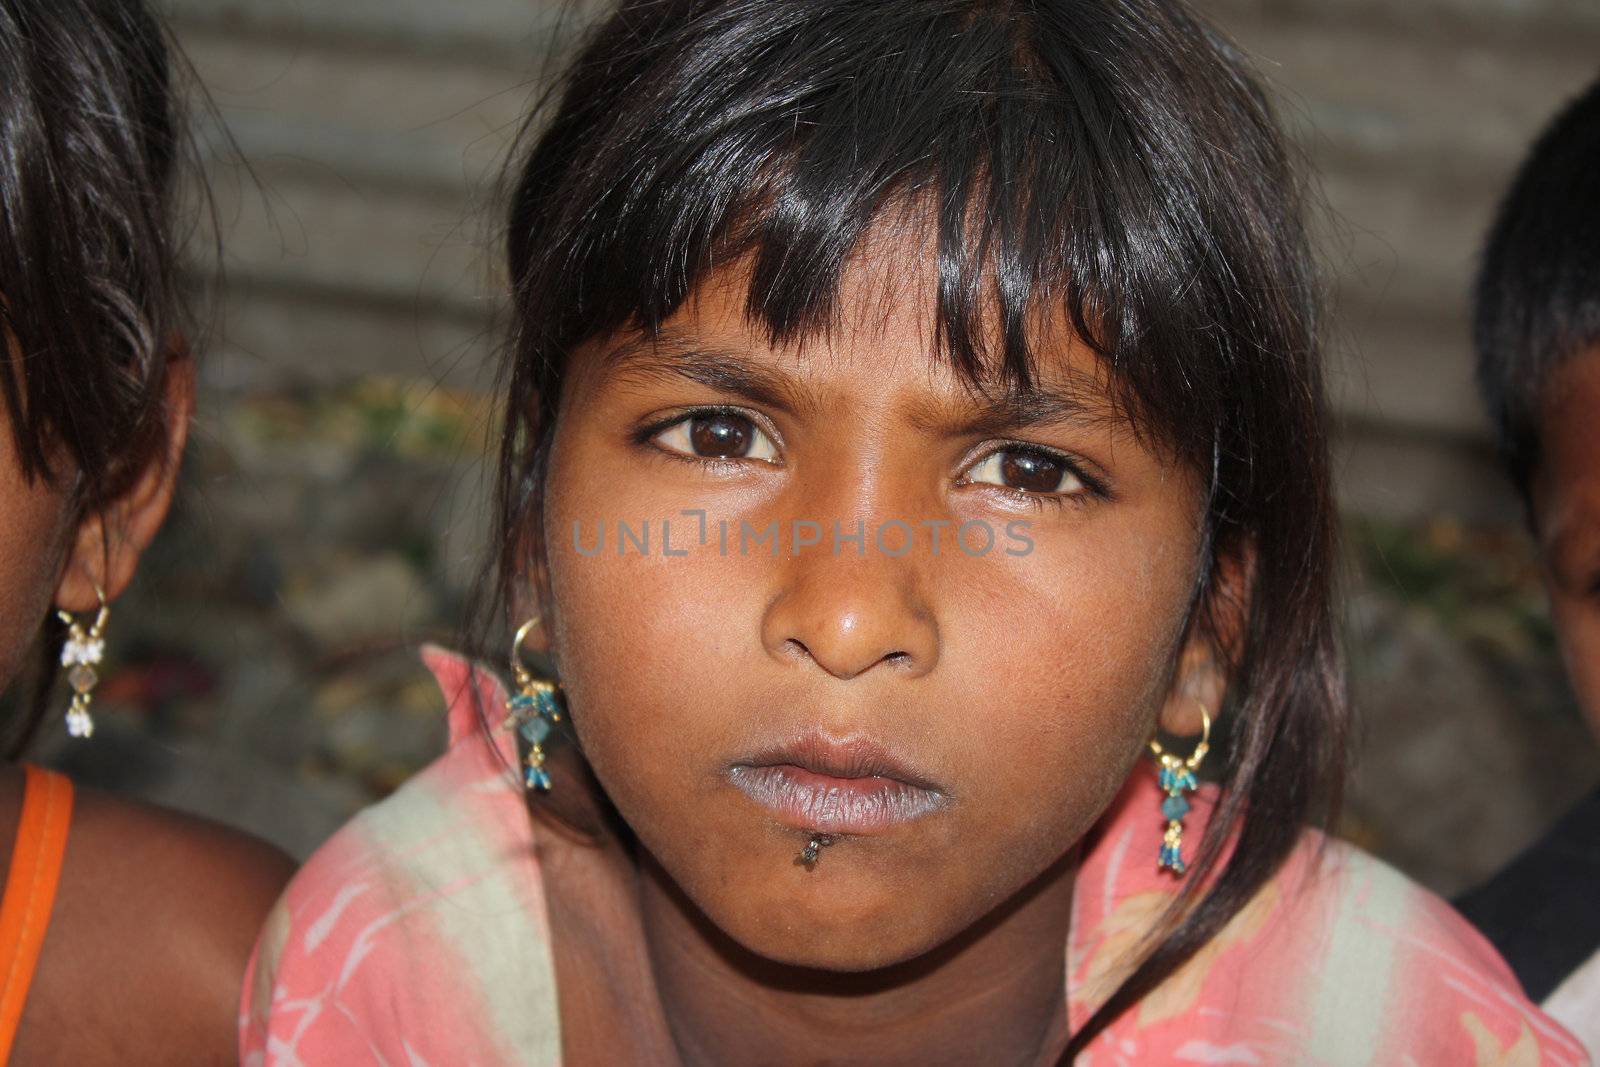 A portrait of a poor Indian beggar girl.